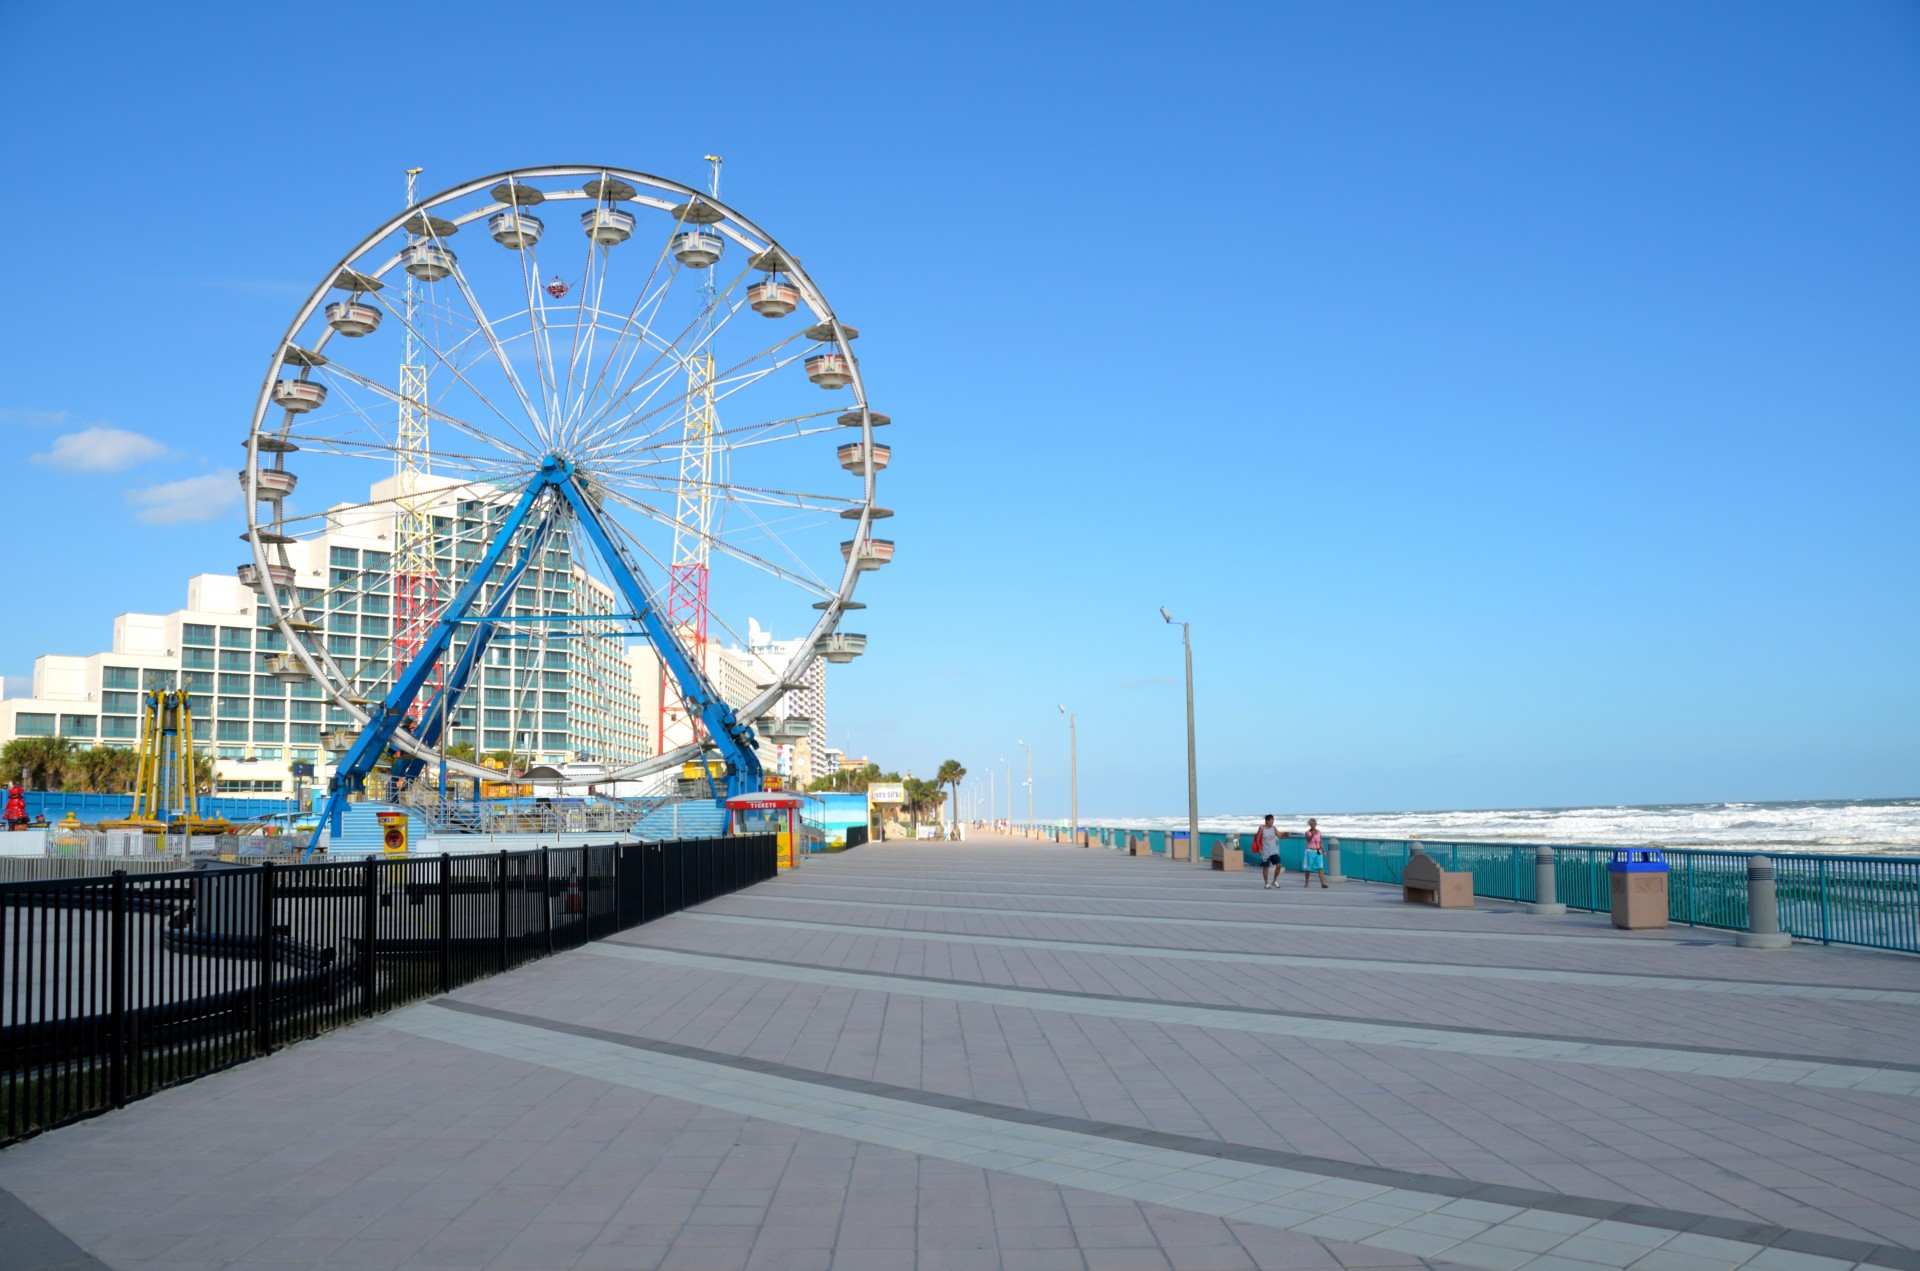 Daytona Beach, Florida recreation area boardwalk